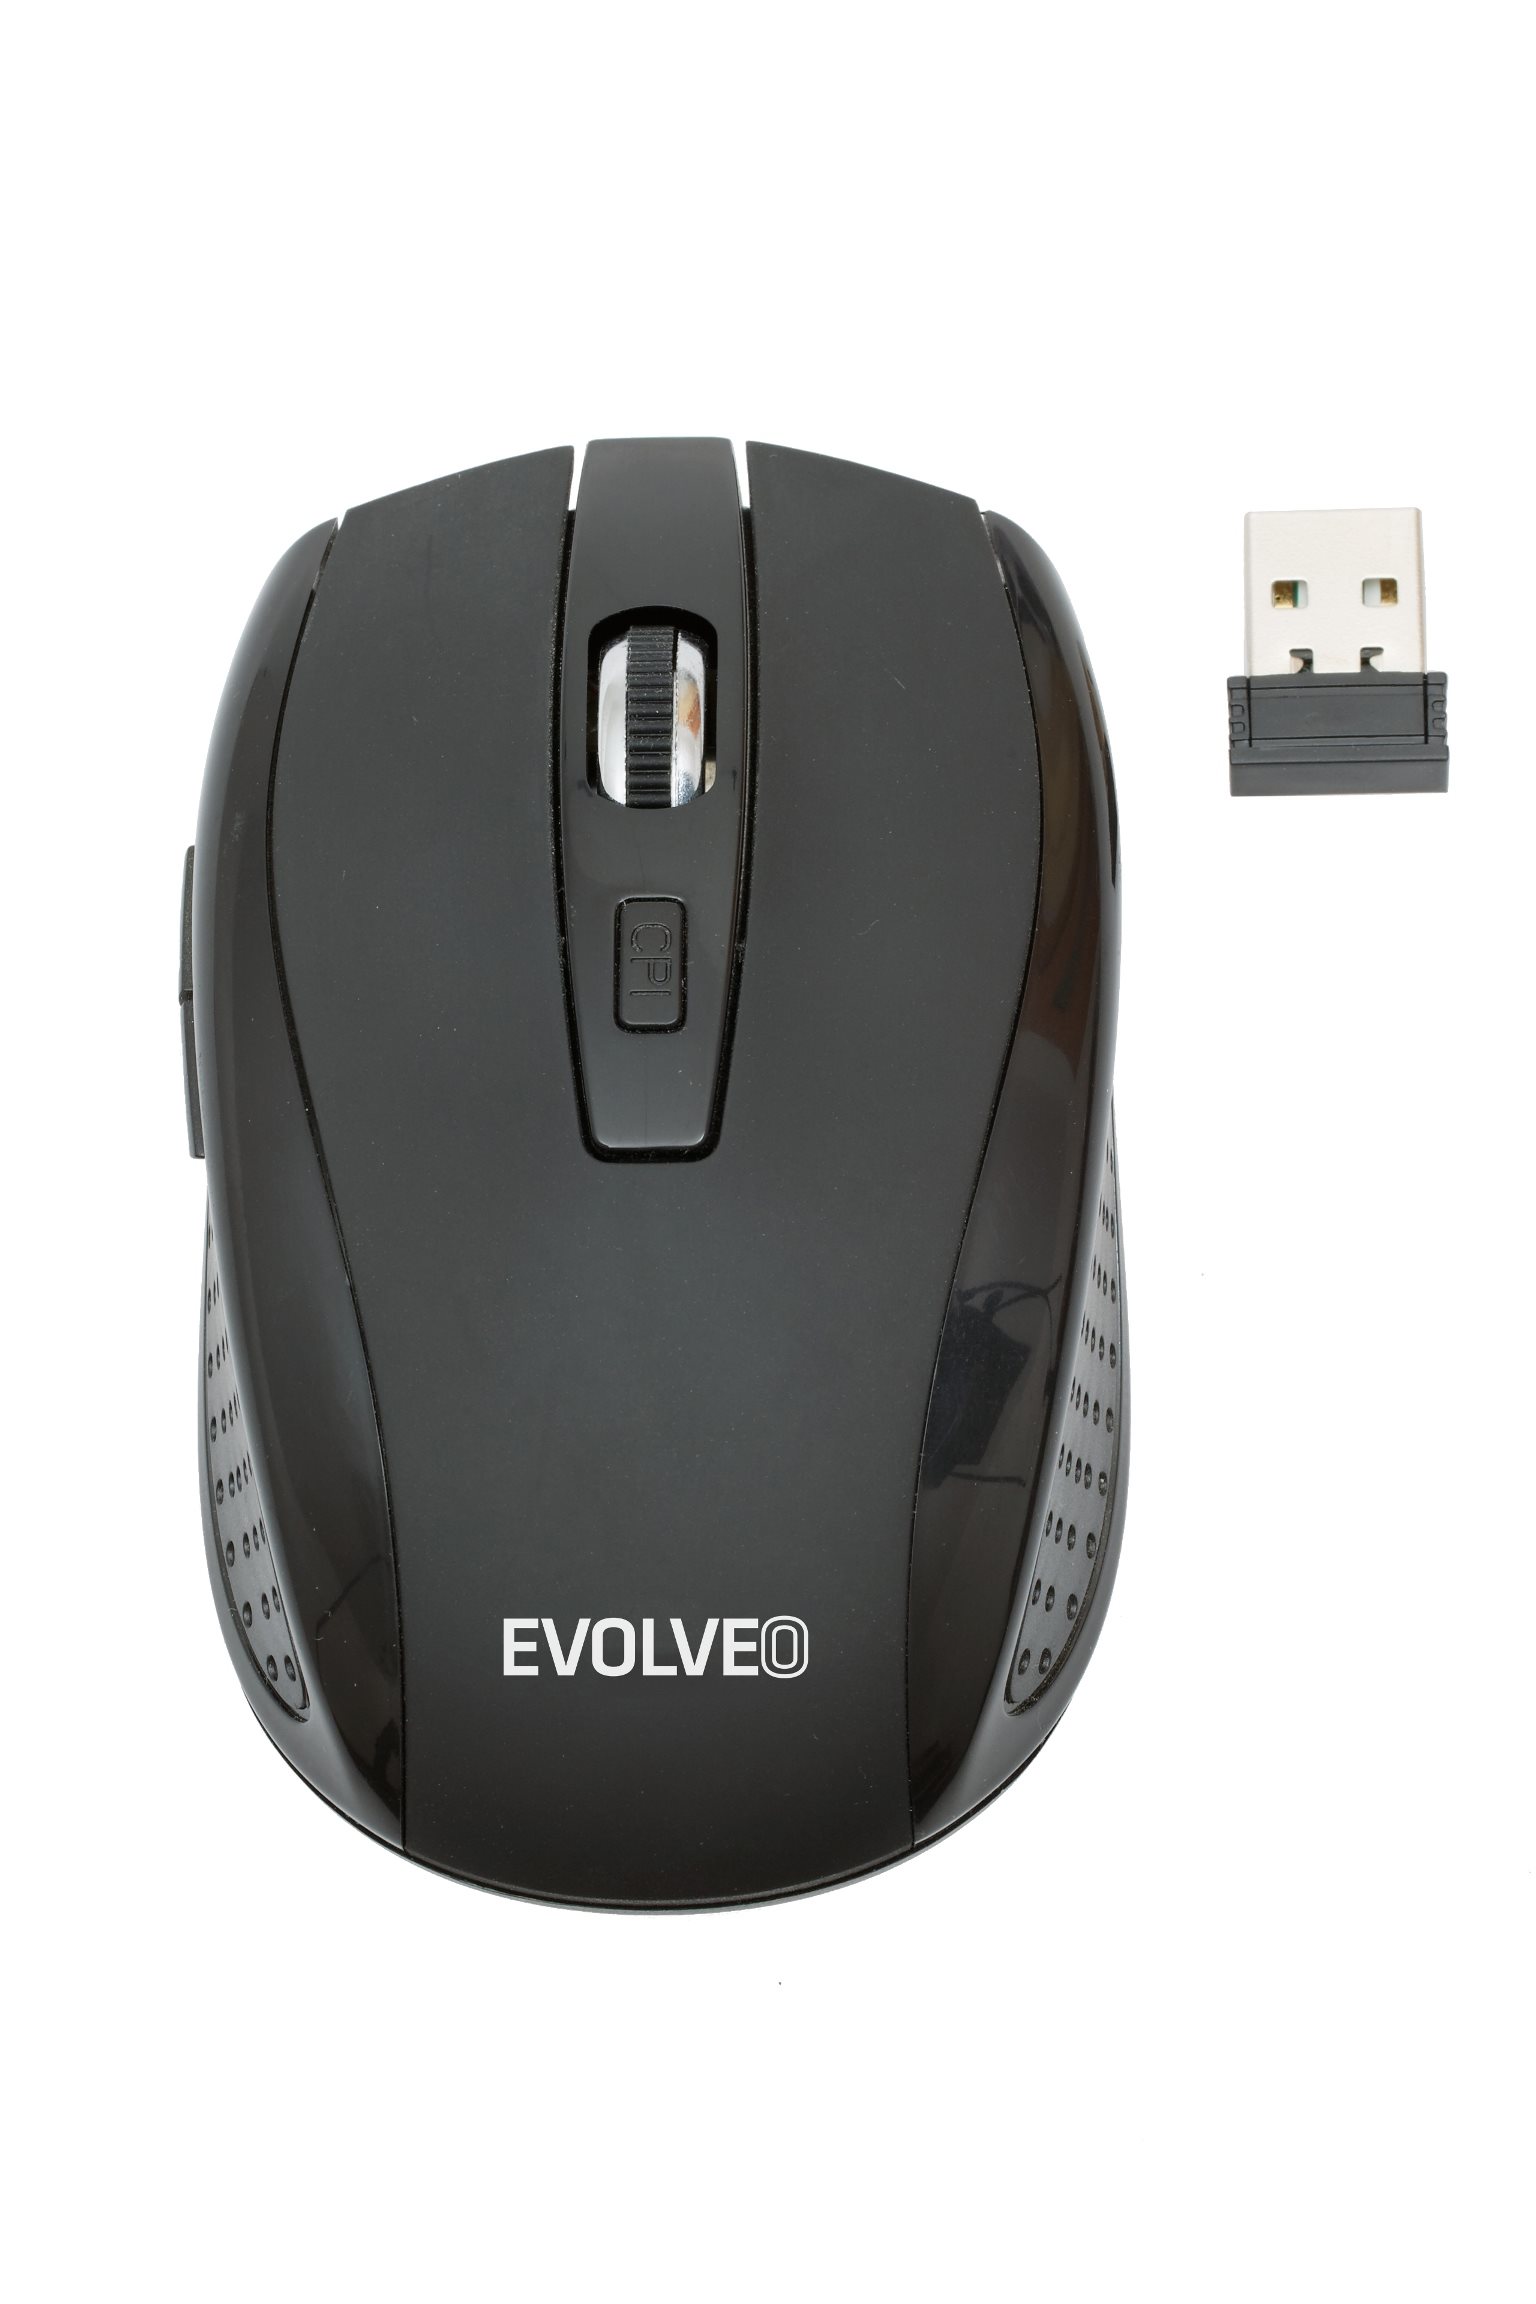 EVOLVEO WM-242B bezdrátová myš